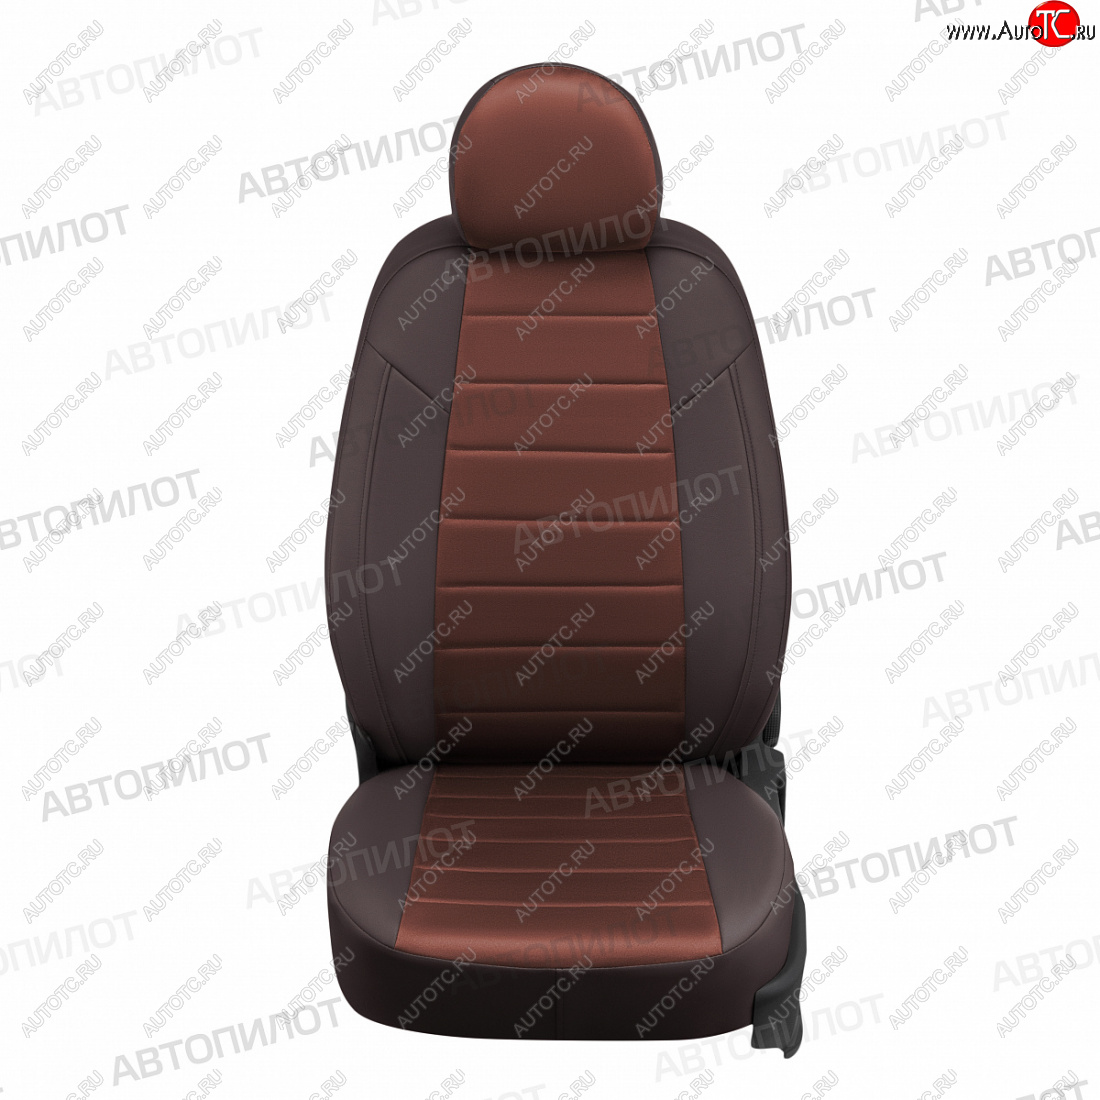 13 449 р. Чехлы сидений (экокожа/алькантара, зад. сид. 40/60) Автопилот  Hyundai Getz  TB (2002-2010) (шоколад)